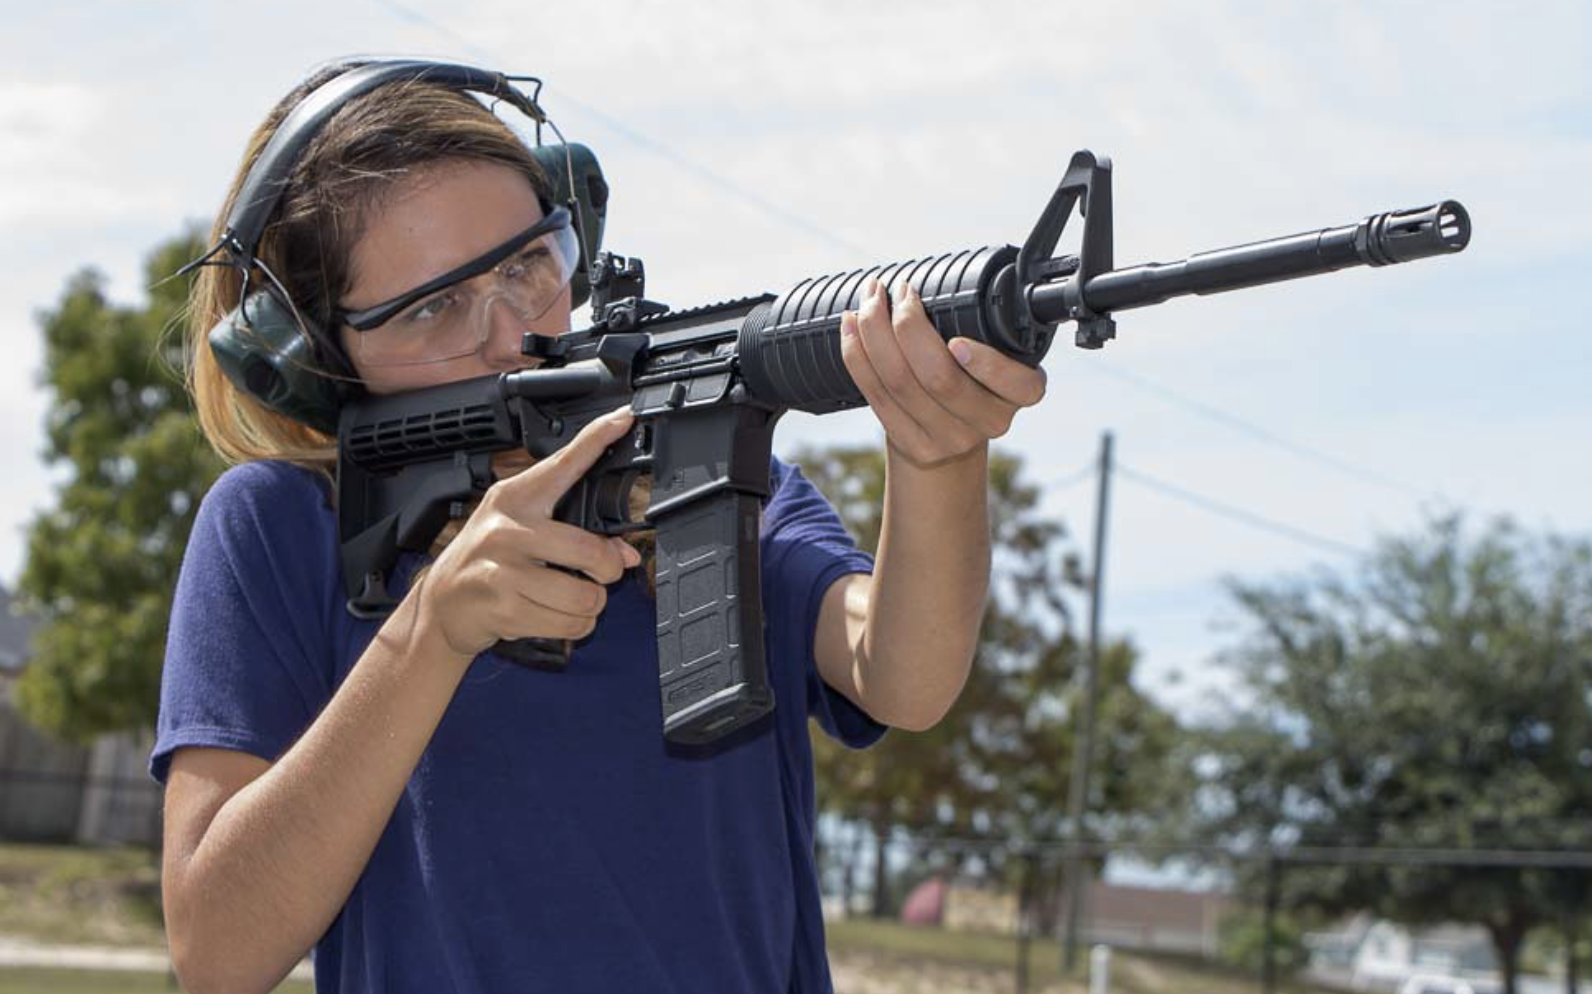 AR-15 bans remain unconstitutional.